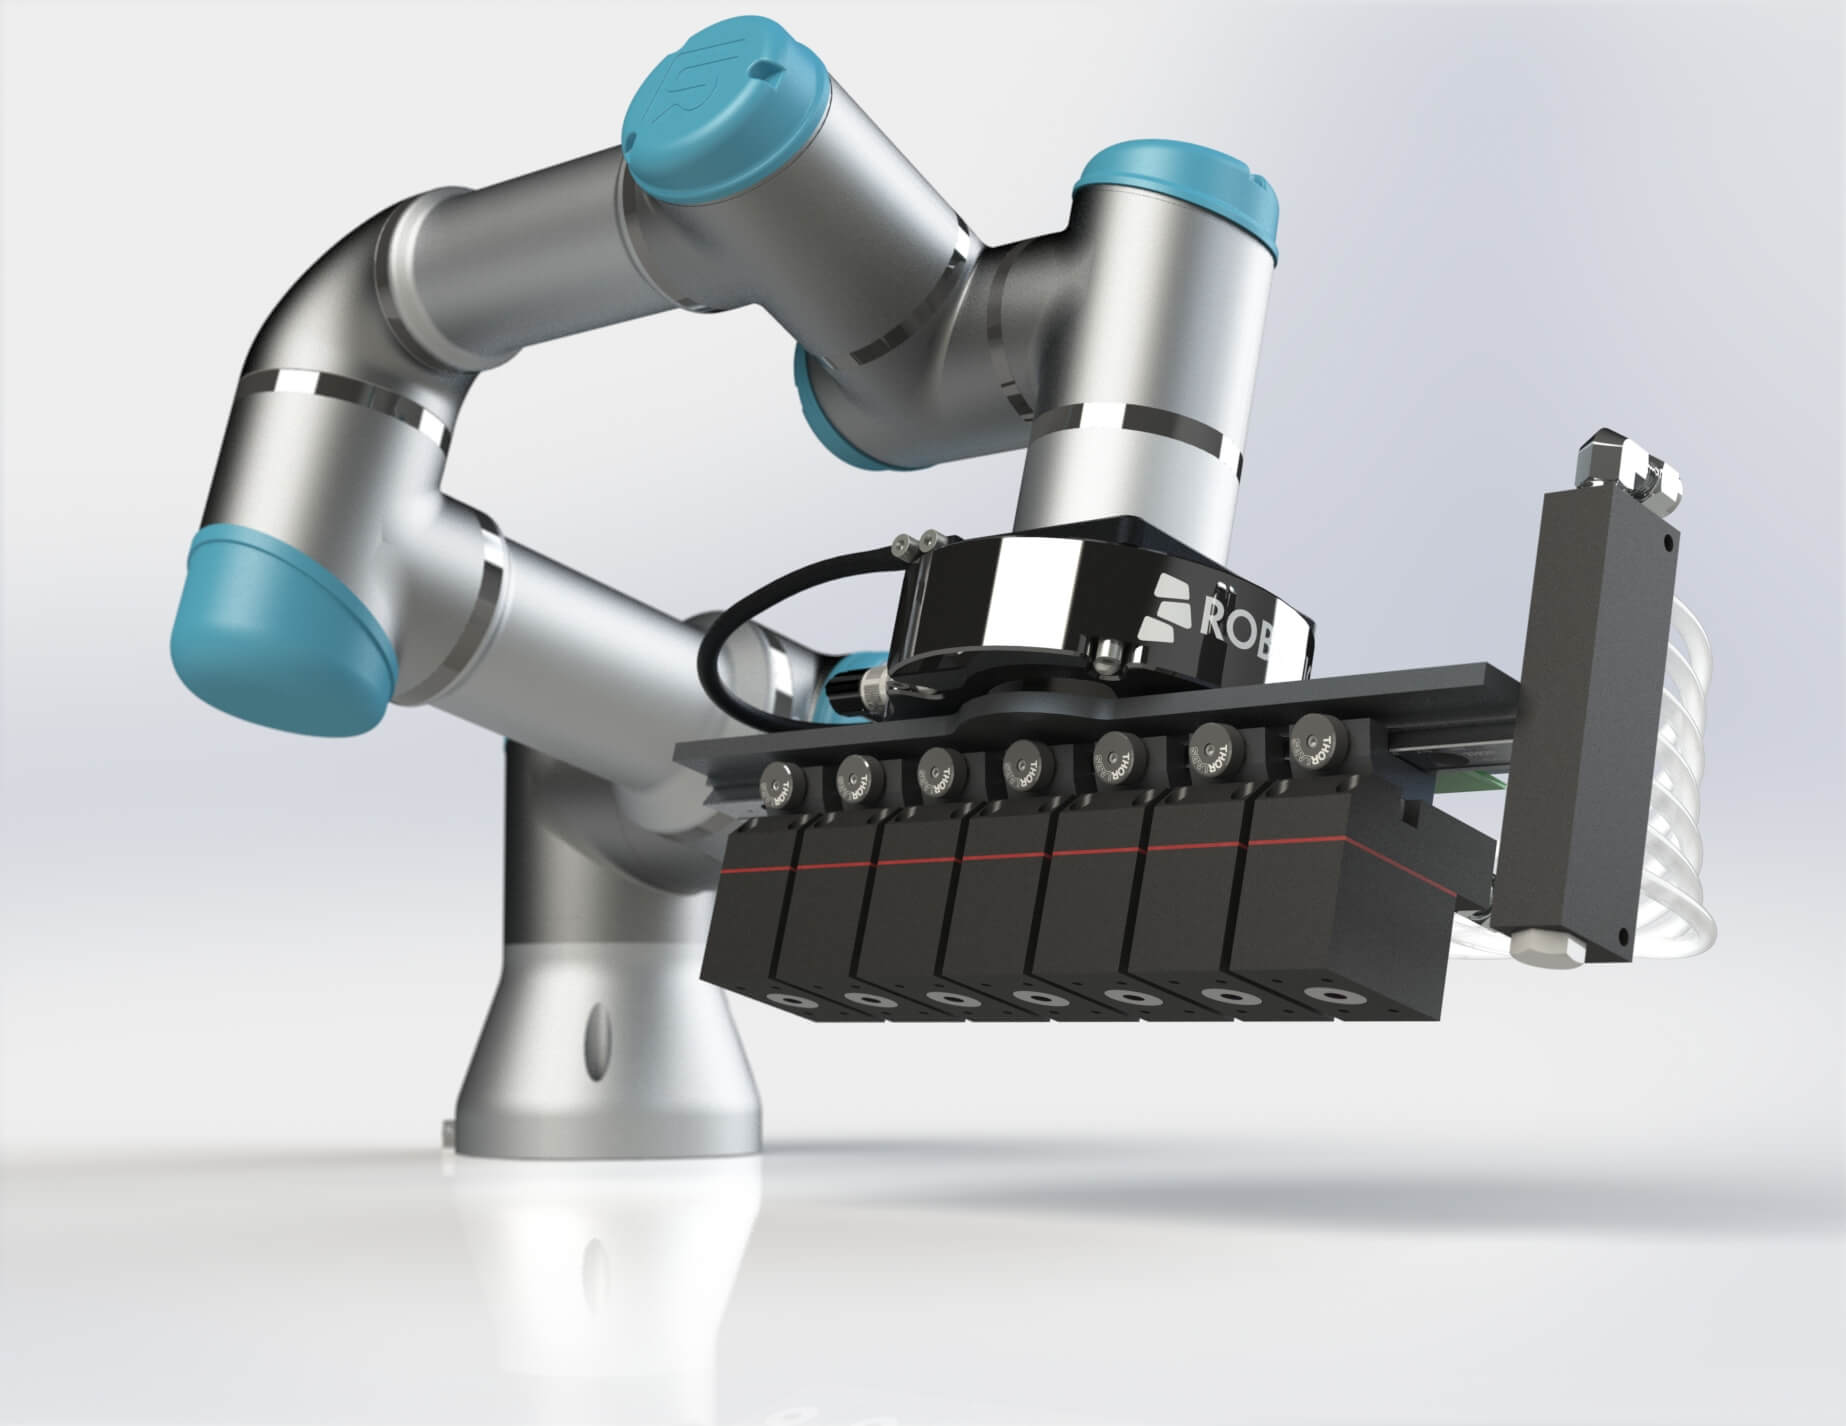 Universal Robots Collaborative Robot Arm UR5 with Custom Fixtures